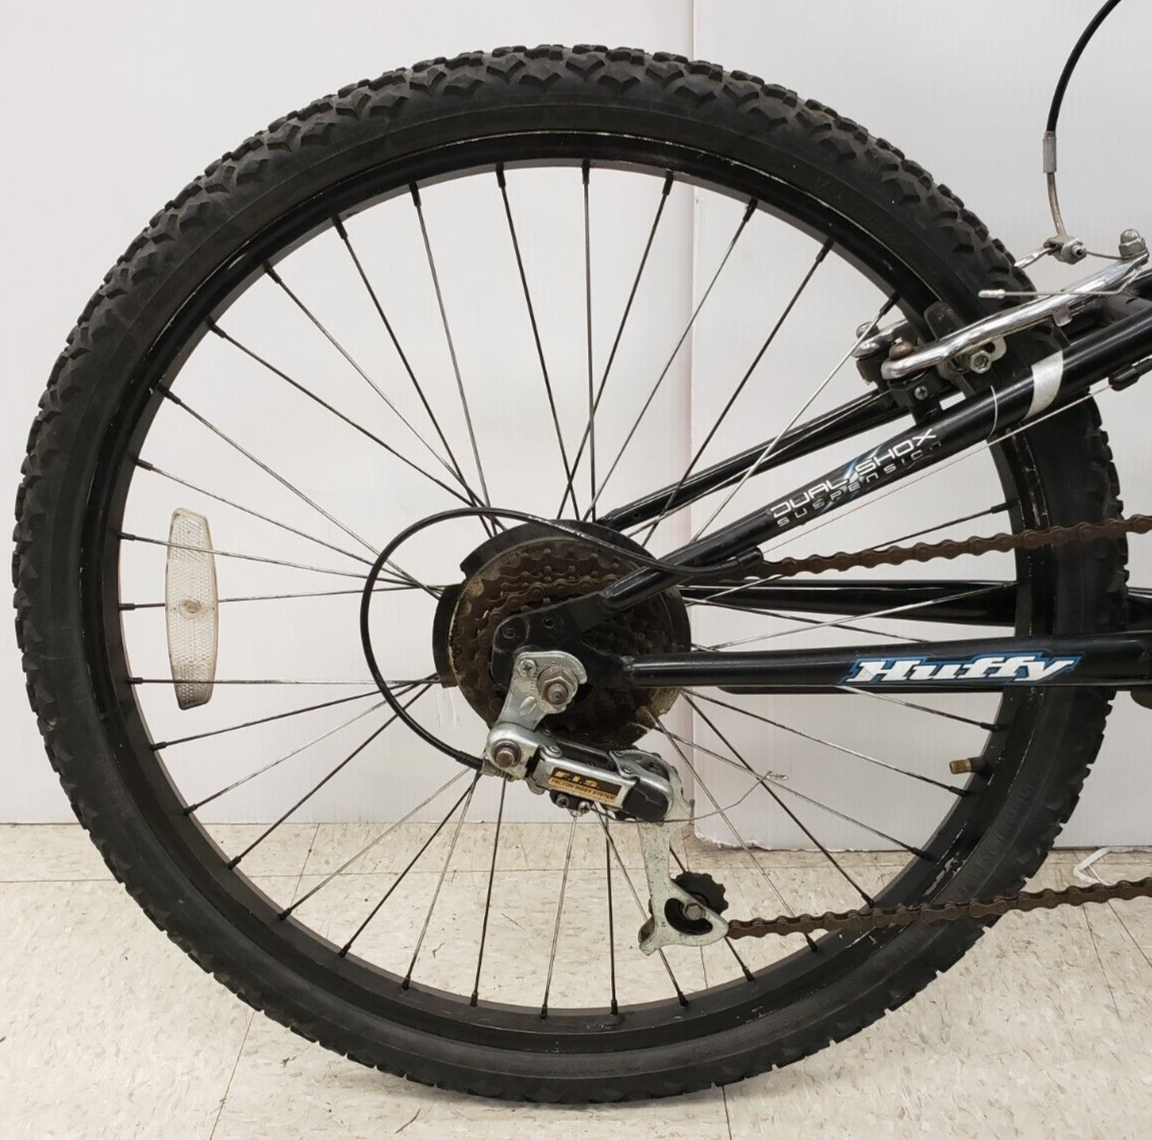 (22148-1) Huffy Tundra Mountain Bike